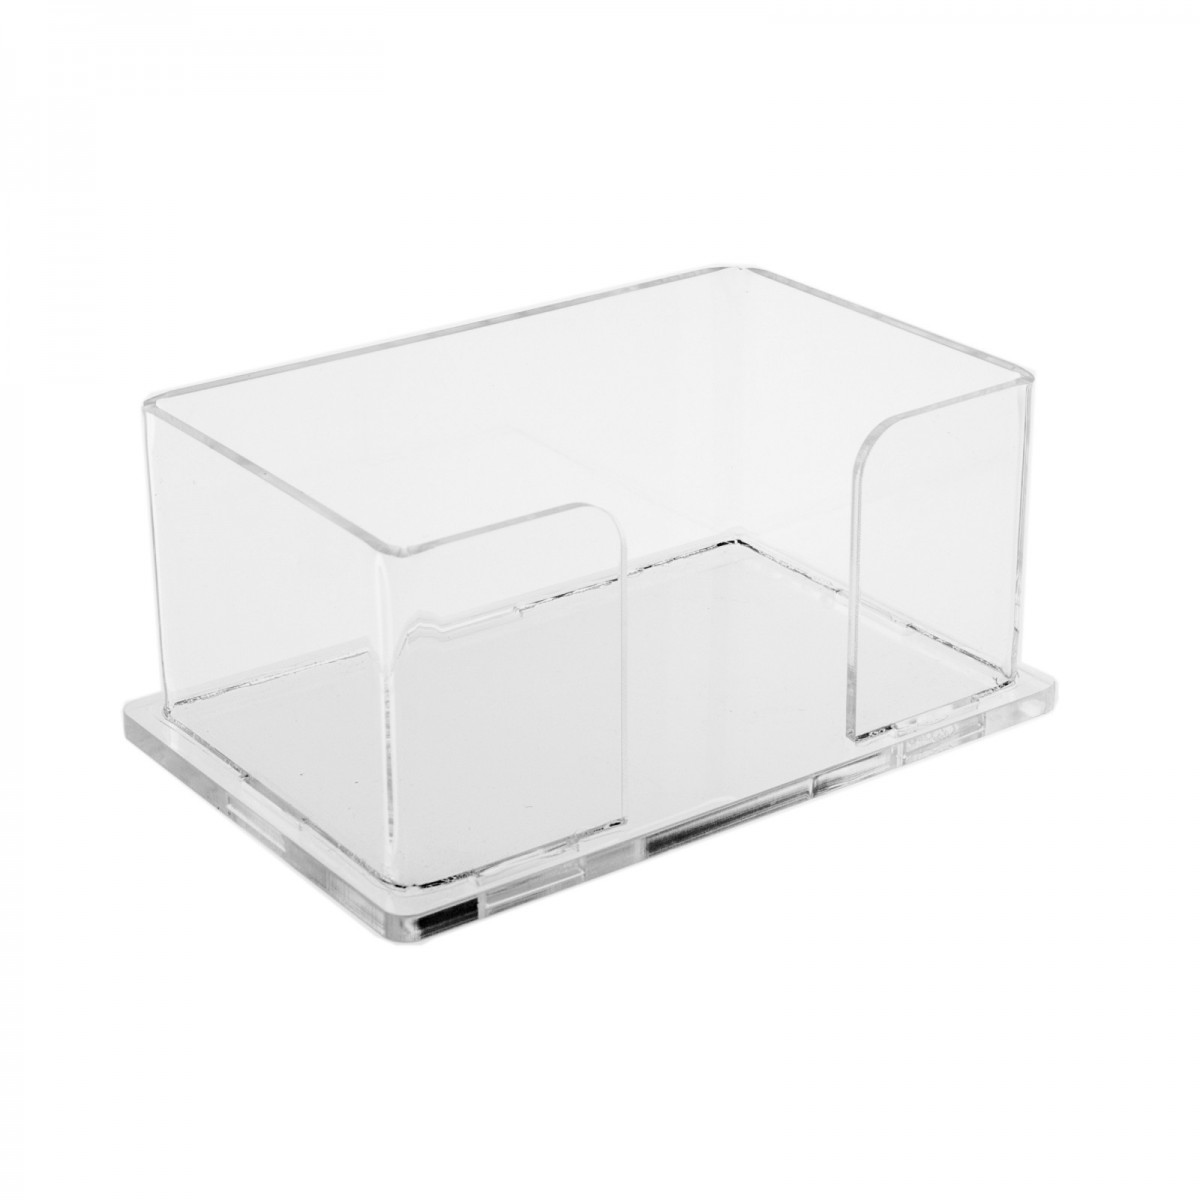 E-052 PP-C - Porta post it in plexiglass trasparente - Misure interne: 13 x 8 x H6 cm